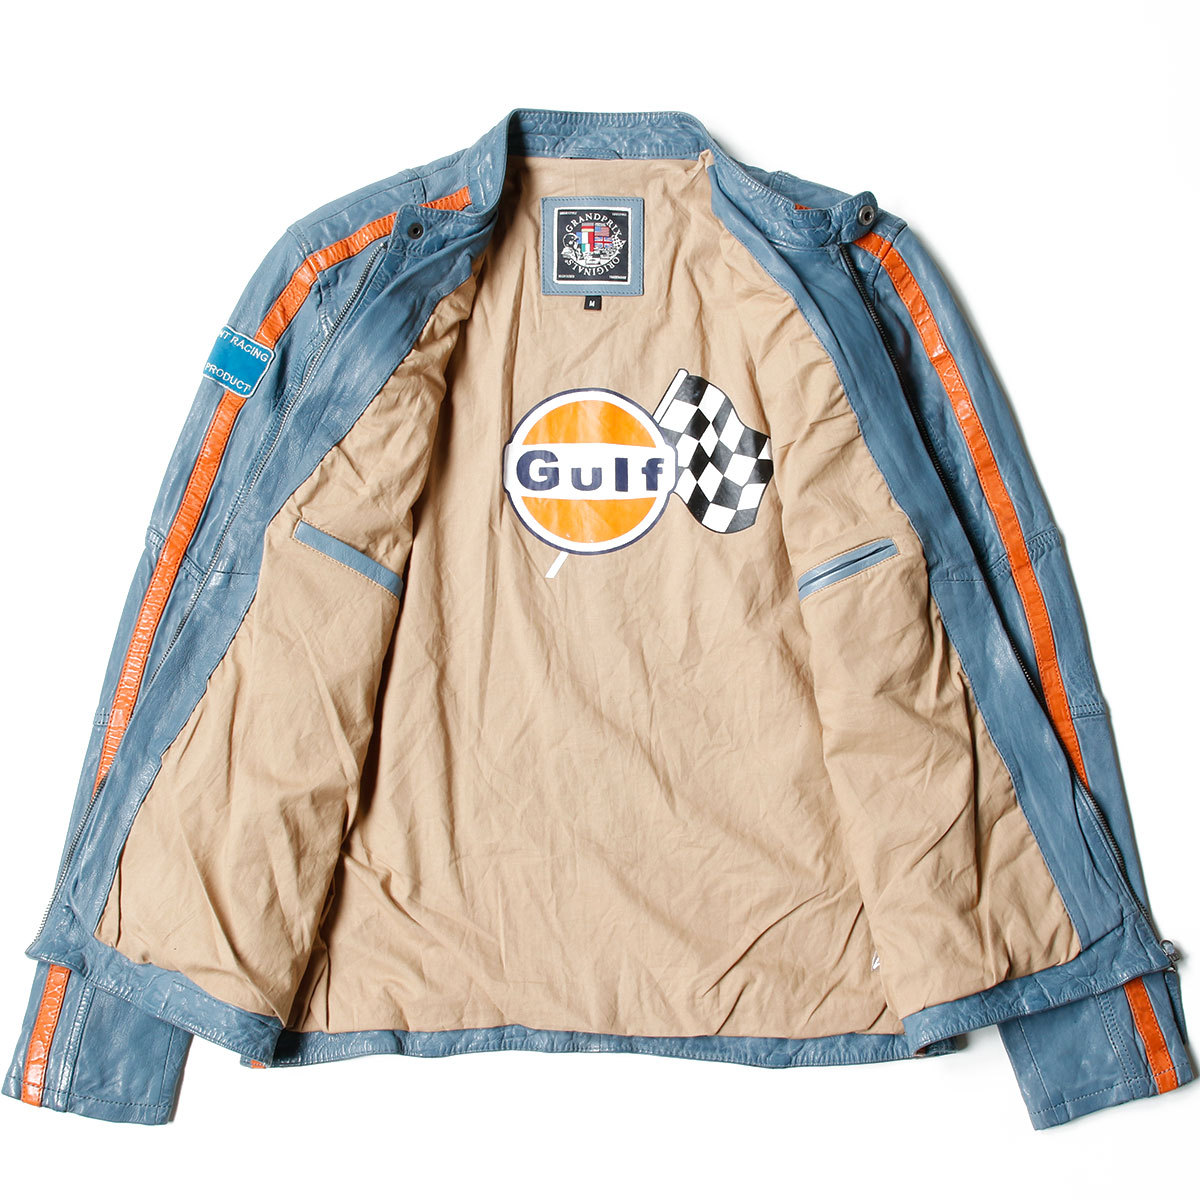  Gulf внешний Classic рейсинг кожаный жакет машина одежда GULF